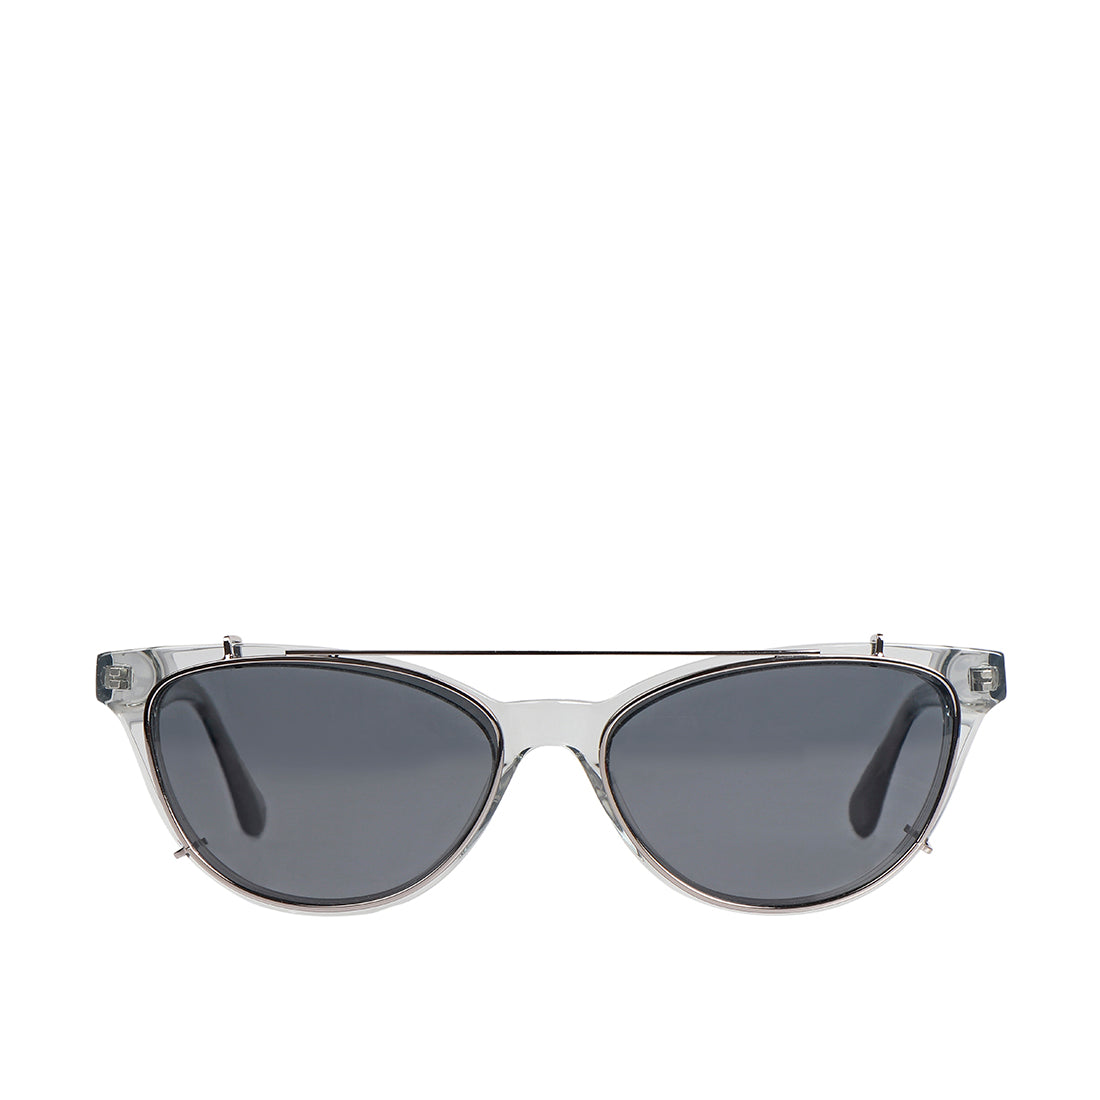 Buy Handpolished Sunglasses for Men and Women Online - Hidesign